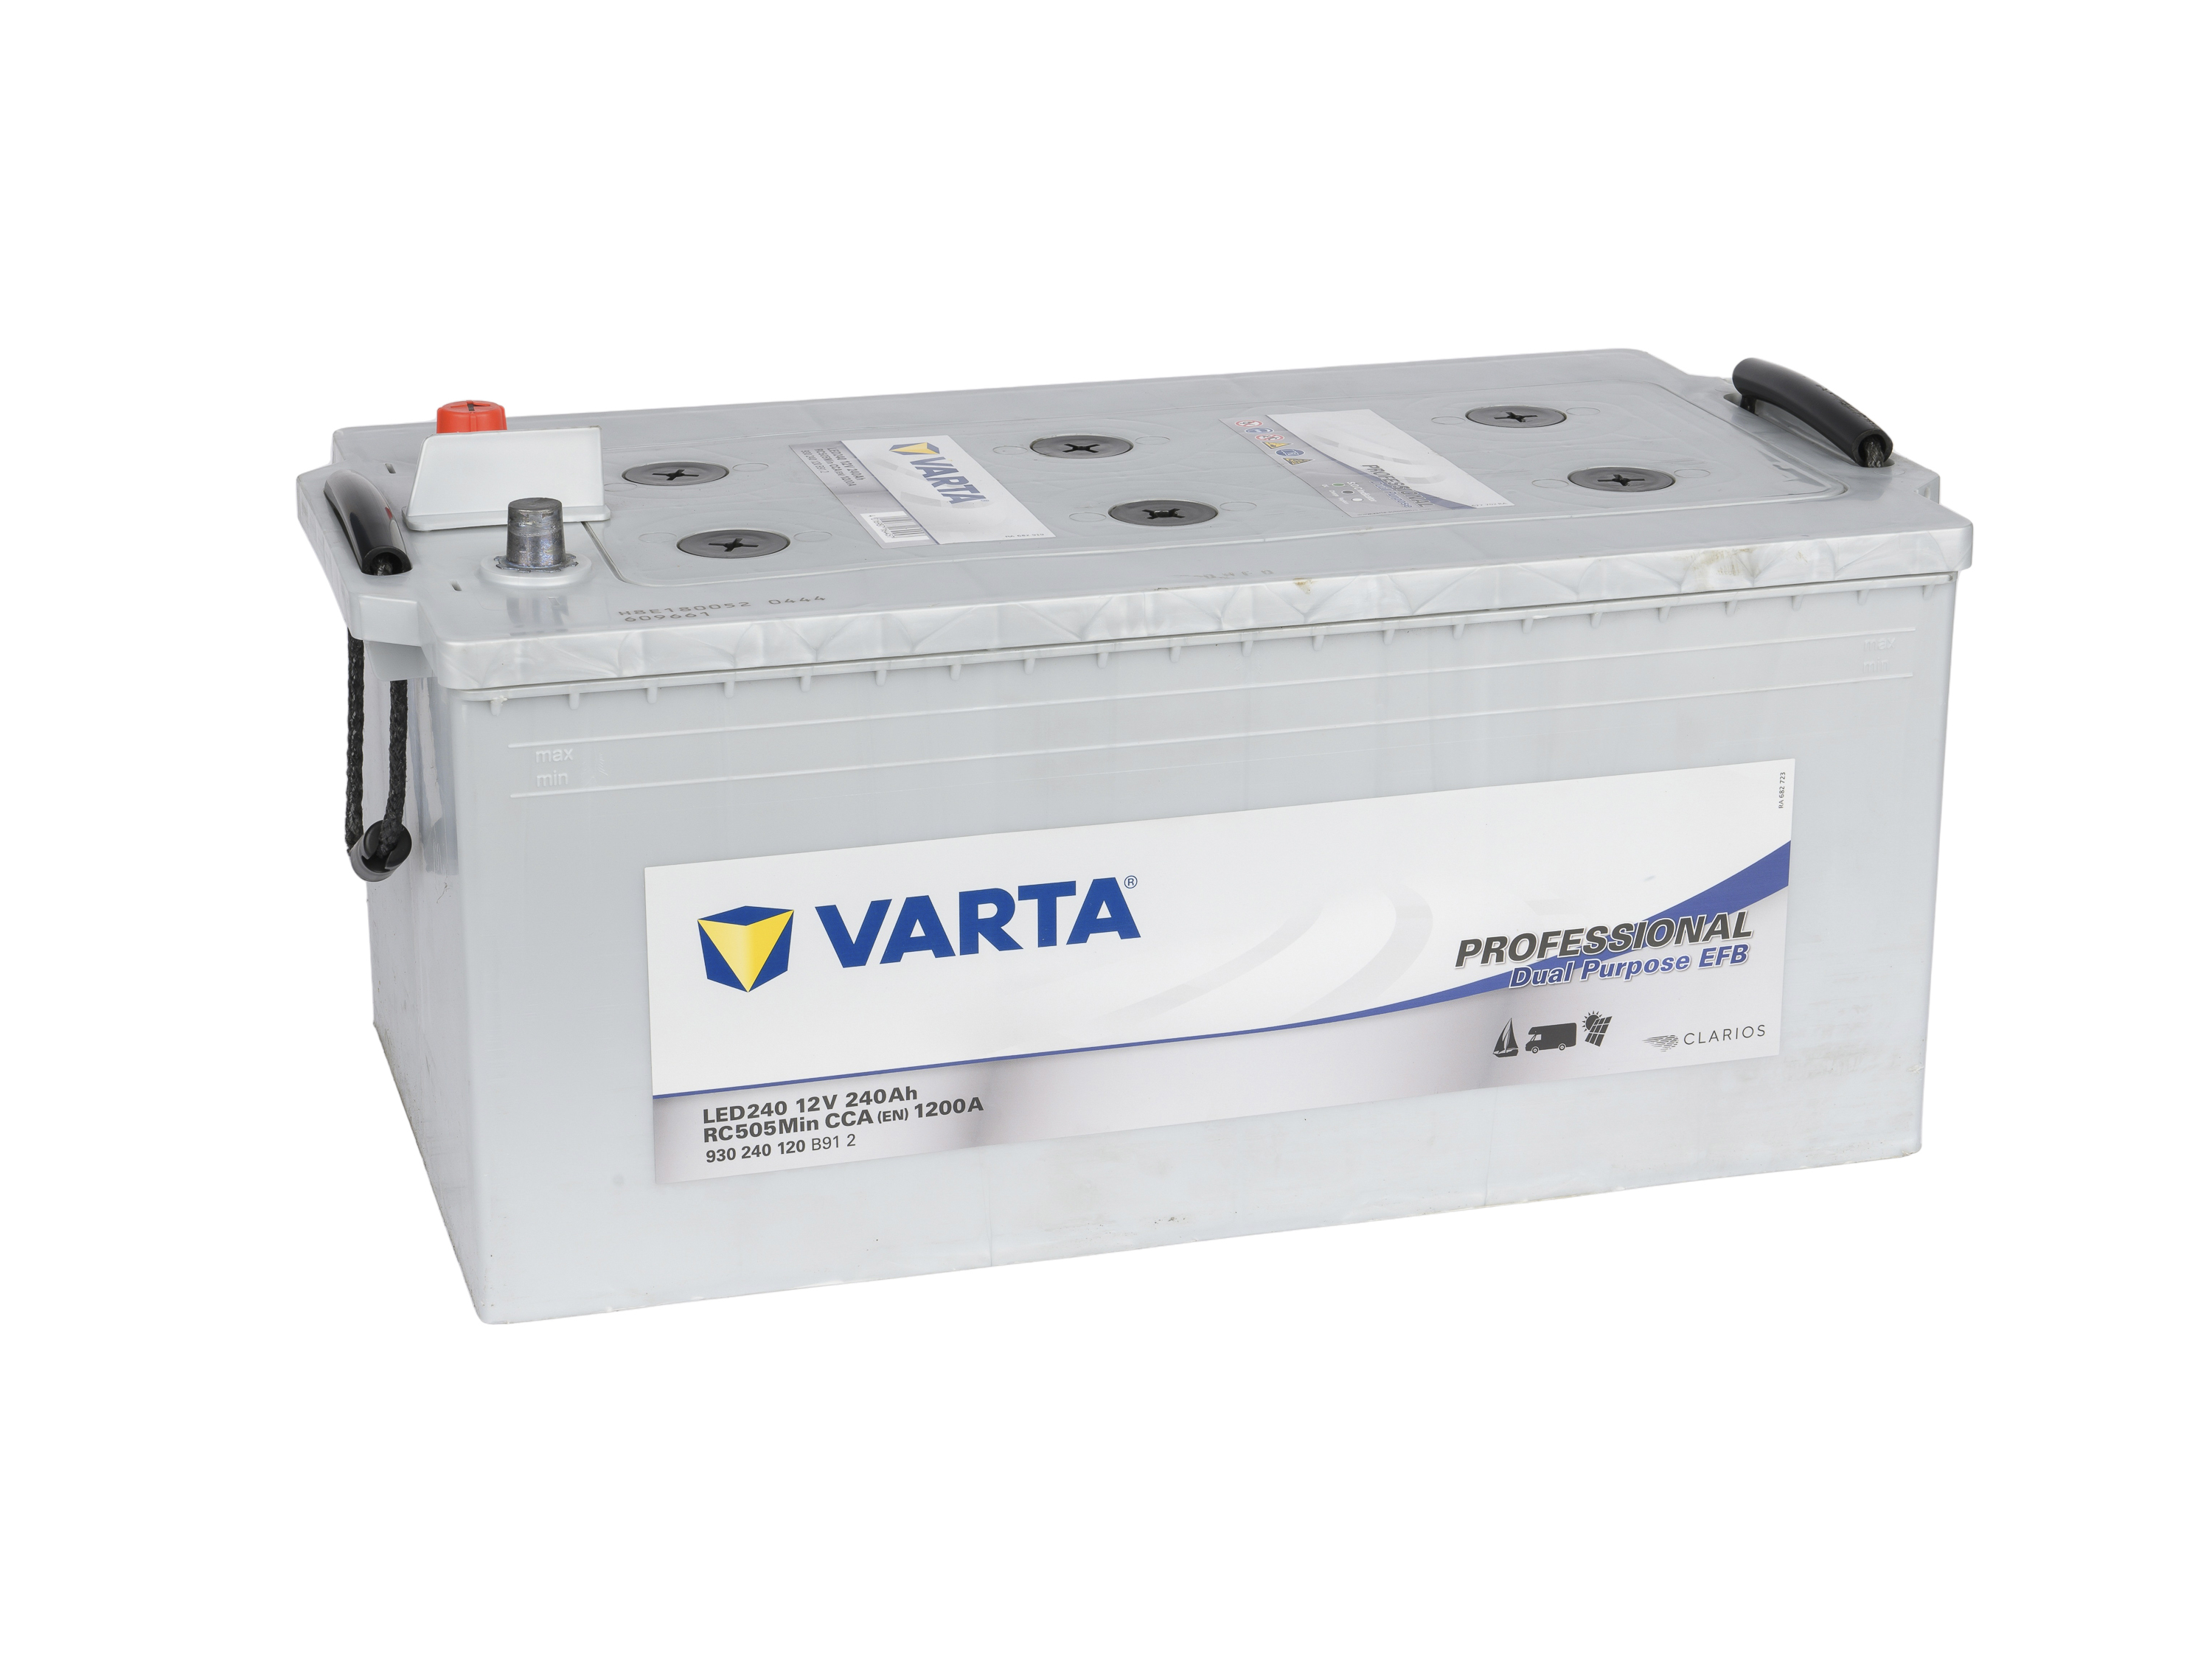 VARTA Batteri Dual Purpose LED240 12 V / 240 AH 930.240.120